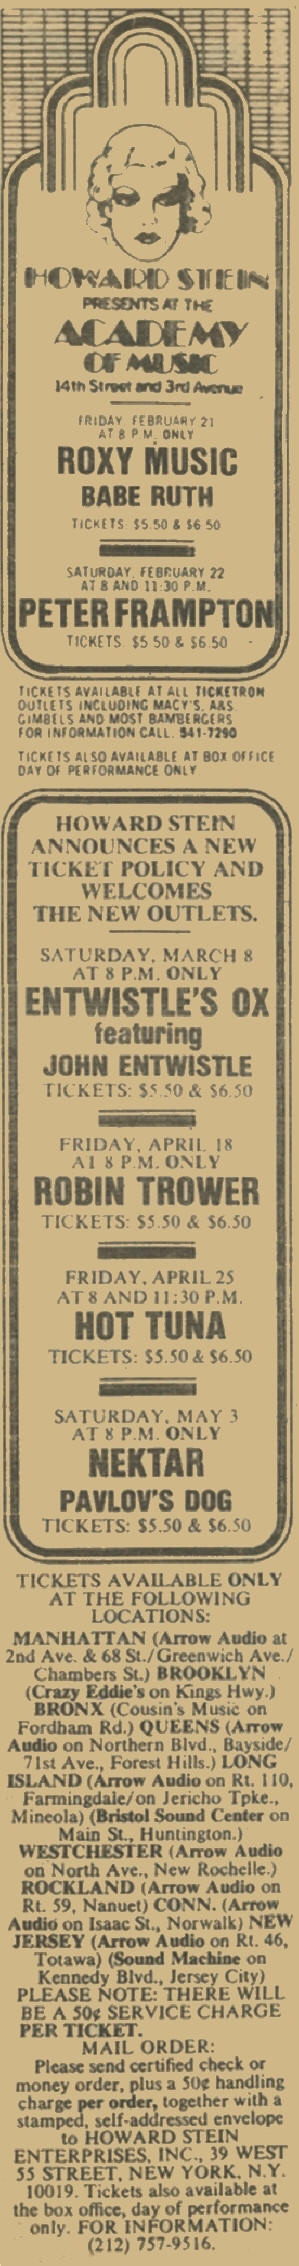 John Entwistle - Academy Of Music - March 8, 1975 USA Ad